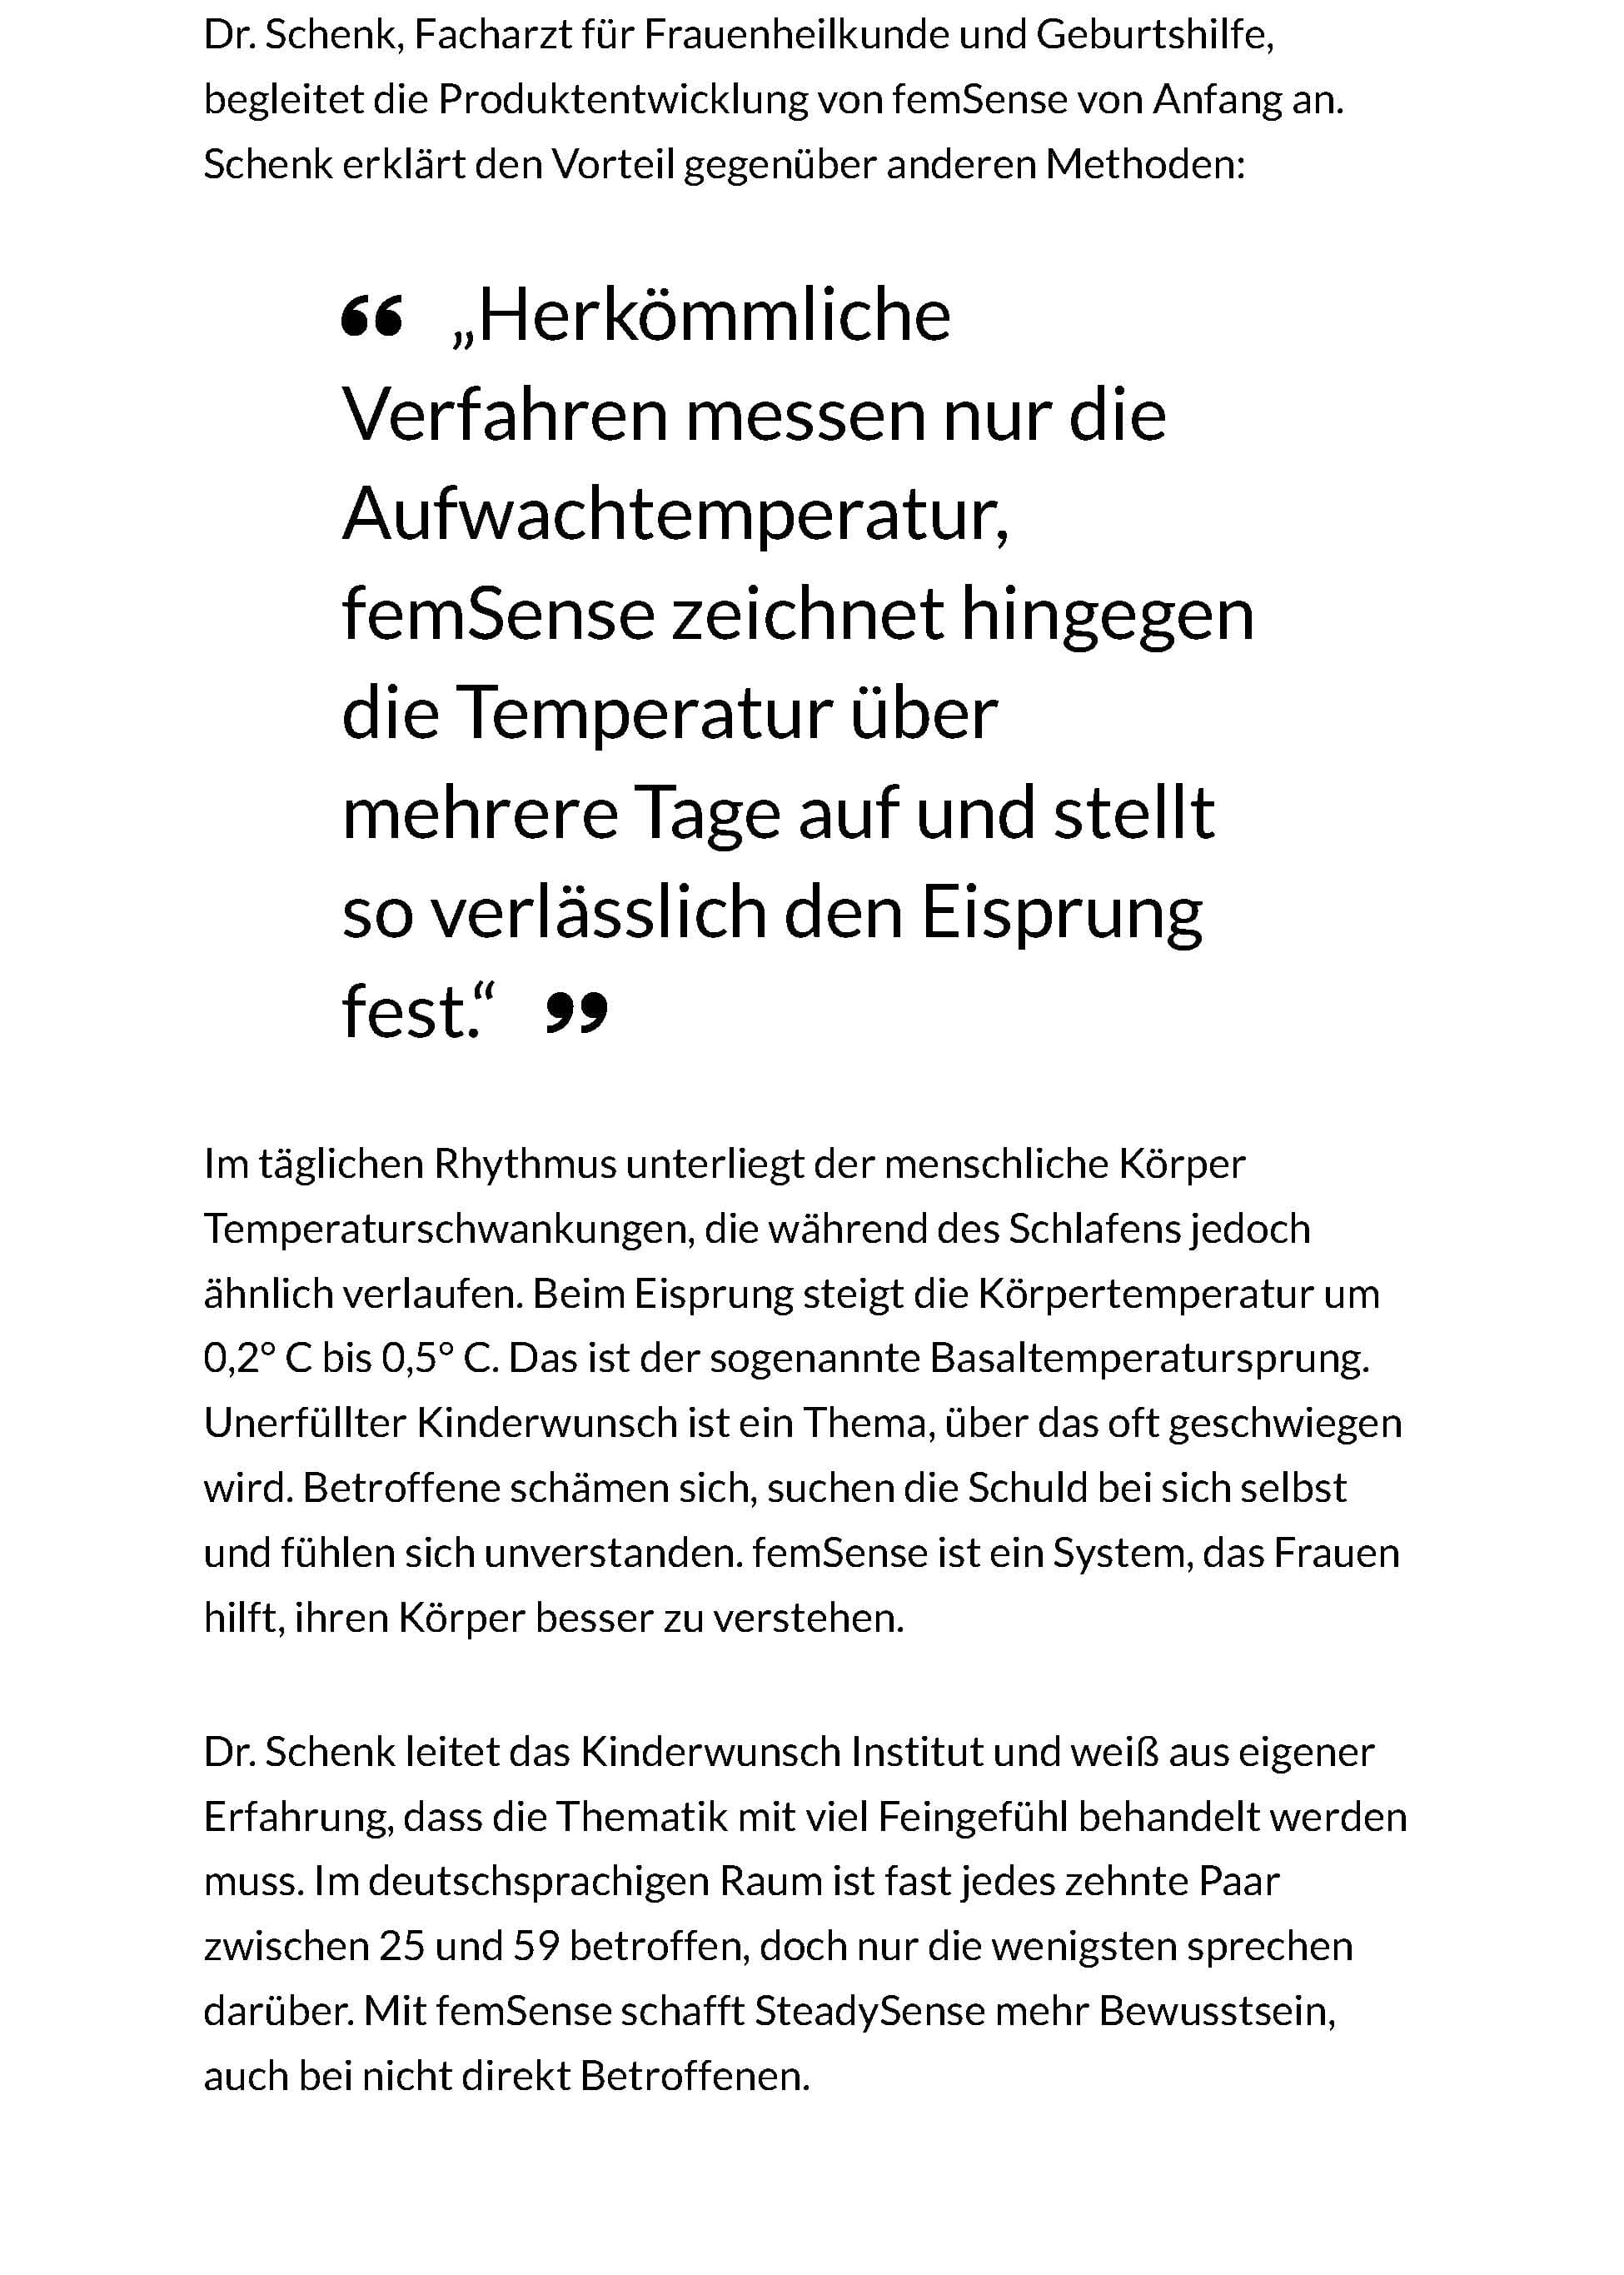 Magazin 40plus on 4. April 2019 writes about femSense, page 4